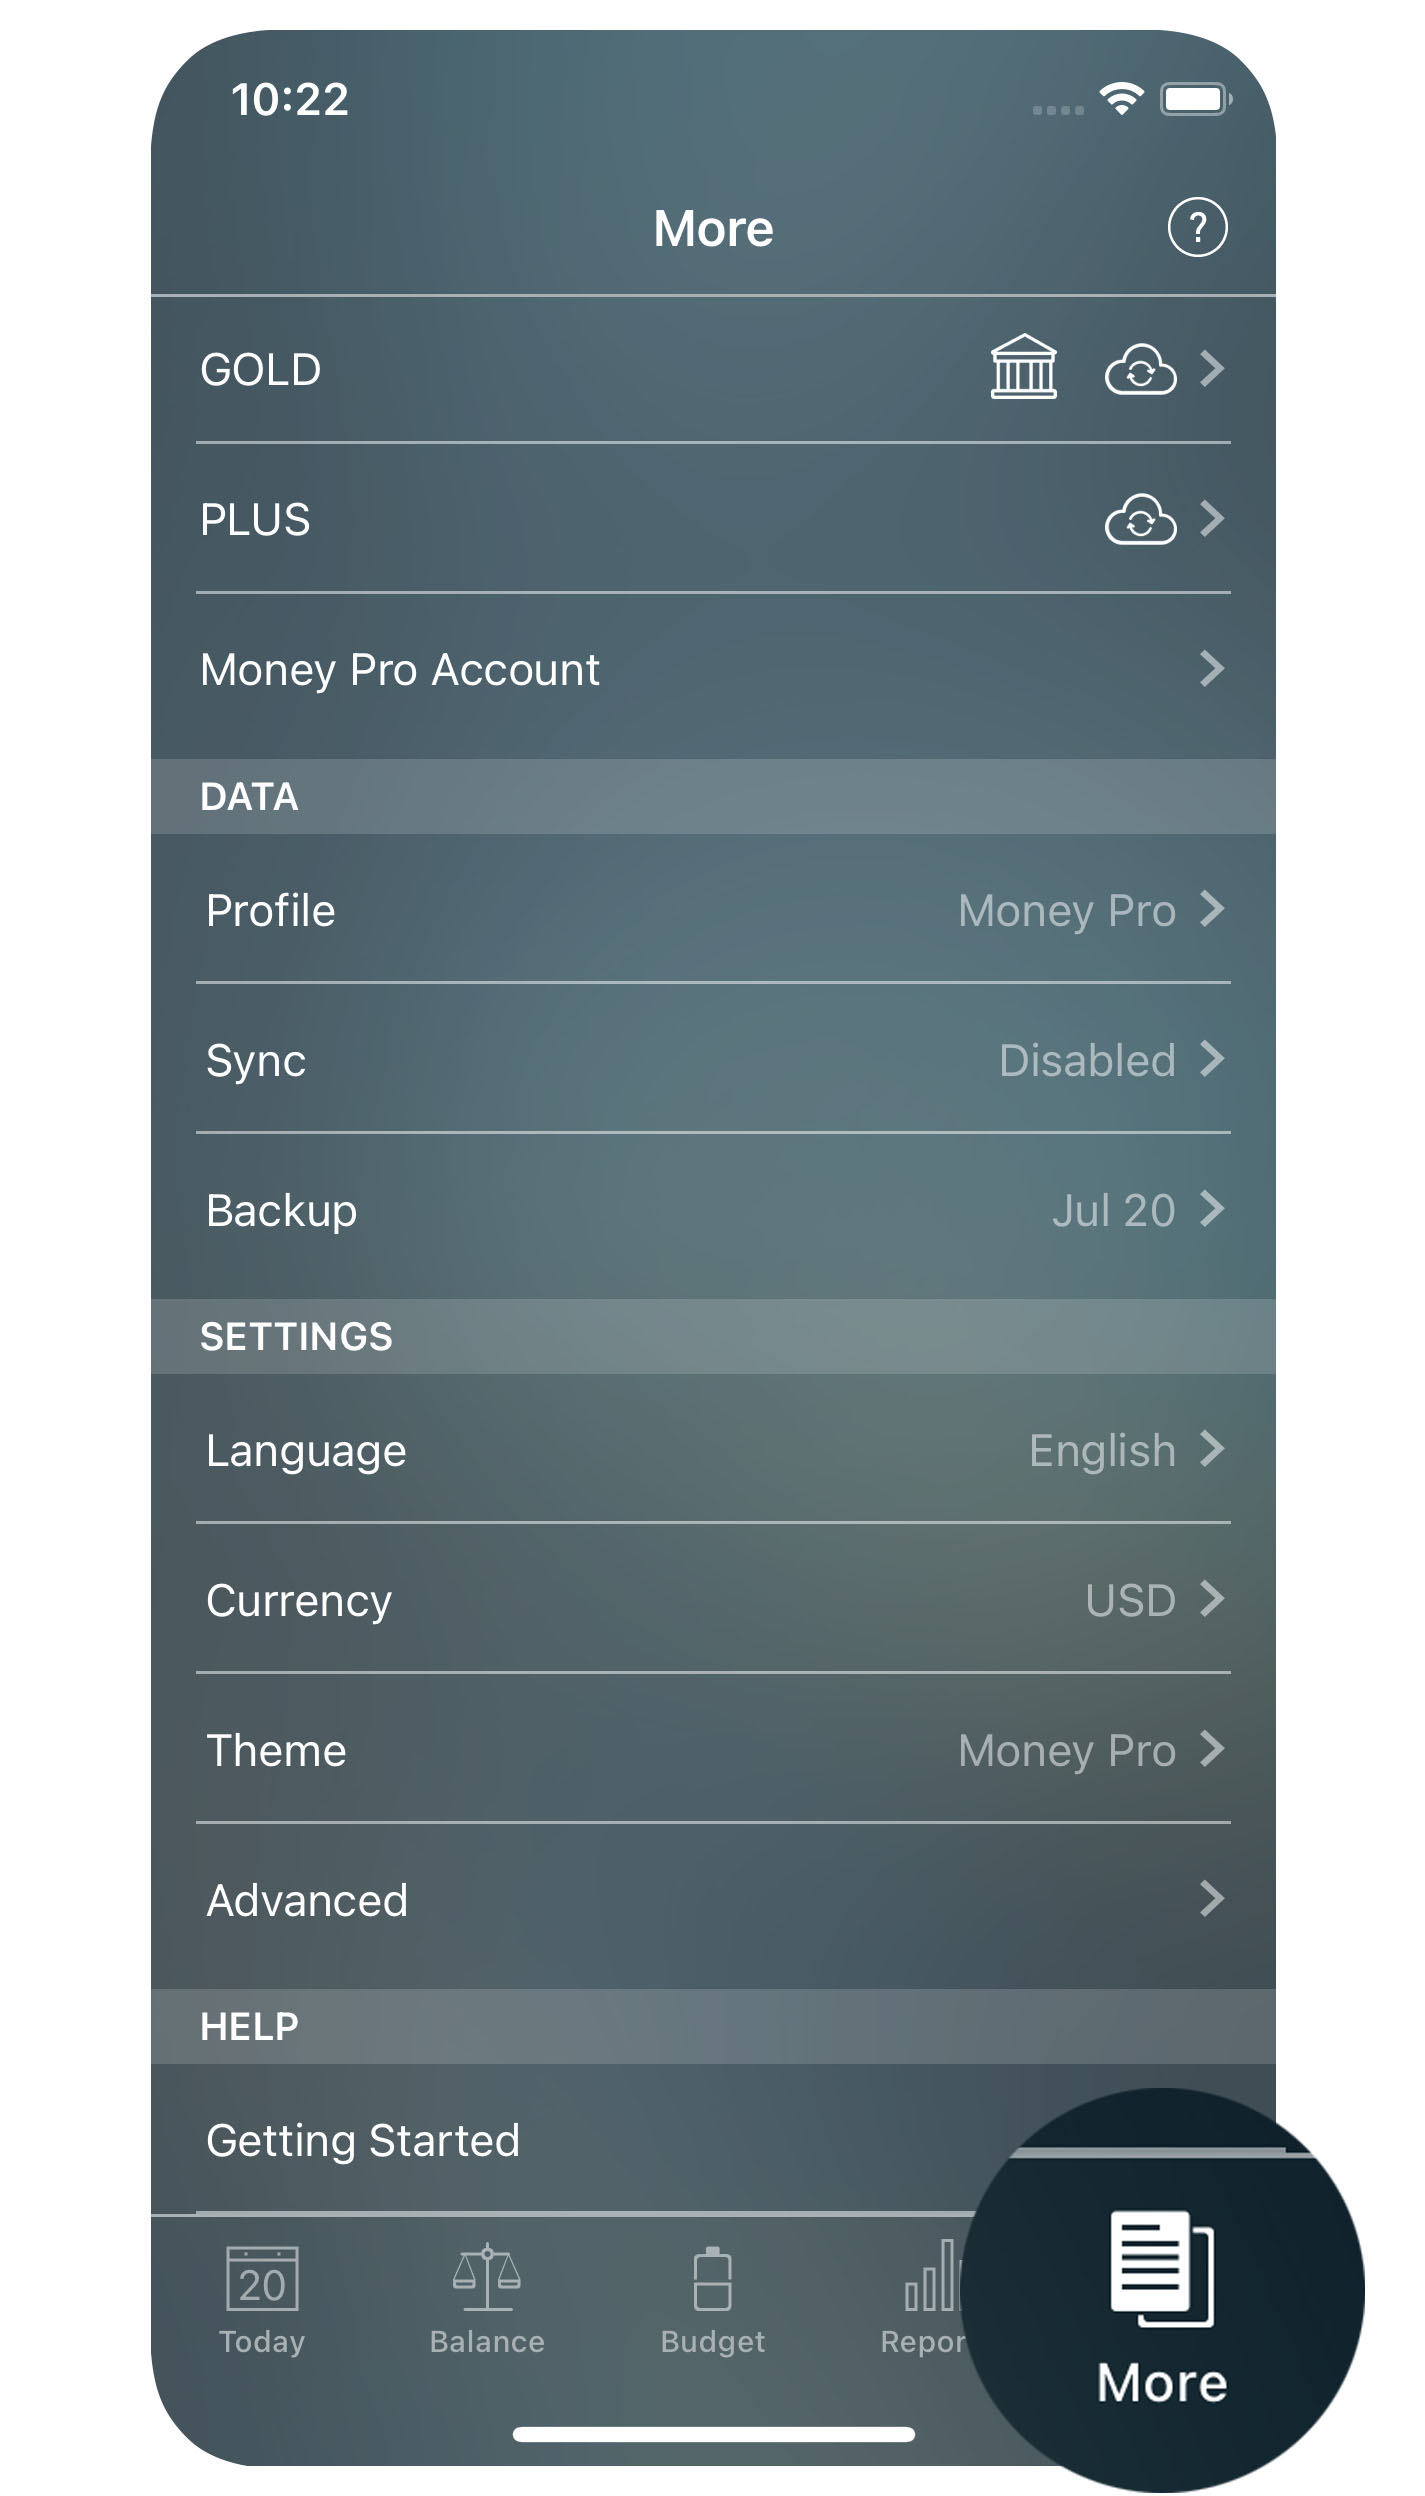 Money Pro - More (backup, profiles, sync) - iPhone